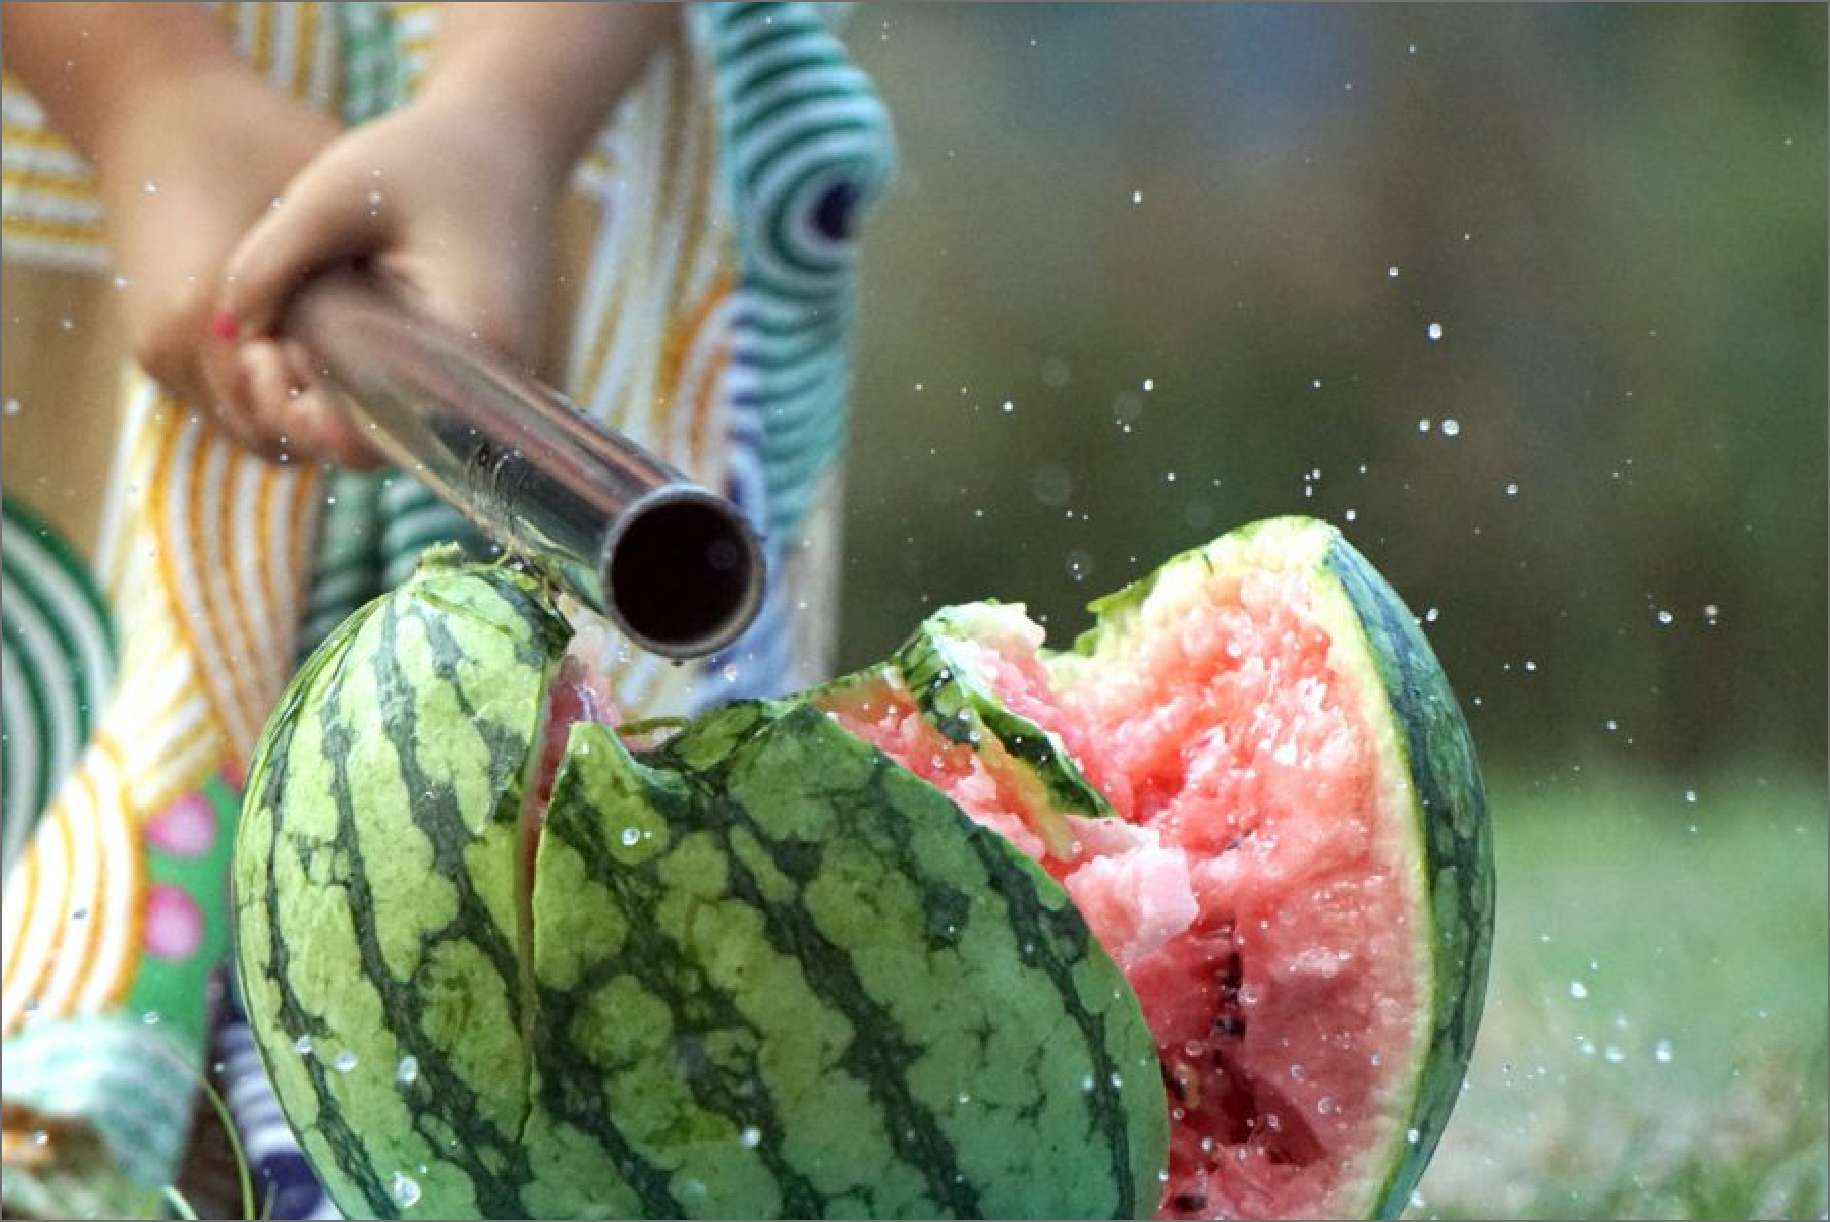 Watermelon splitting experience